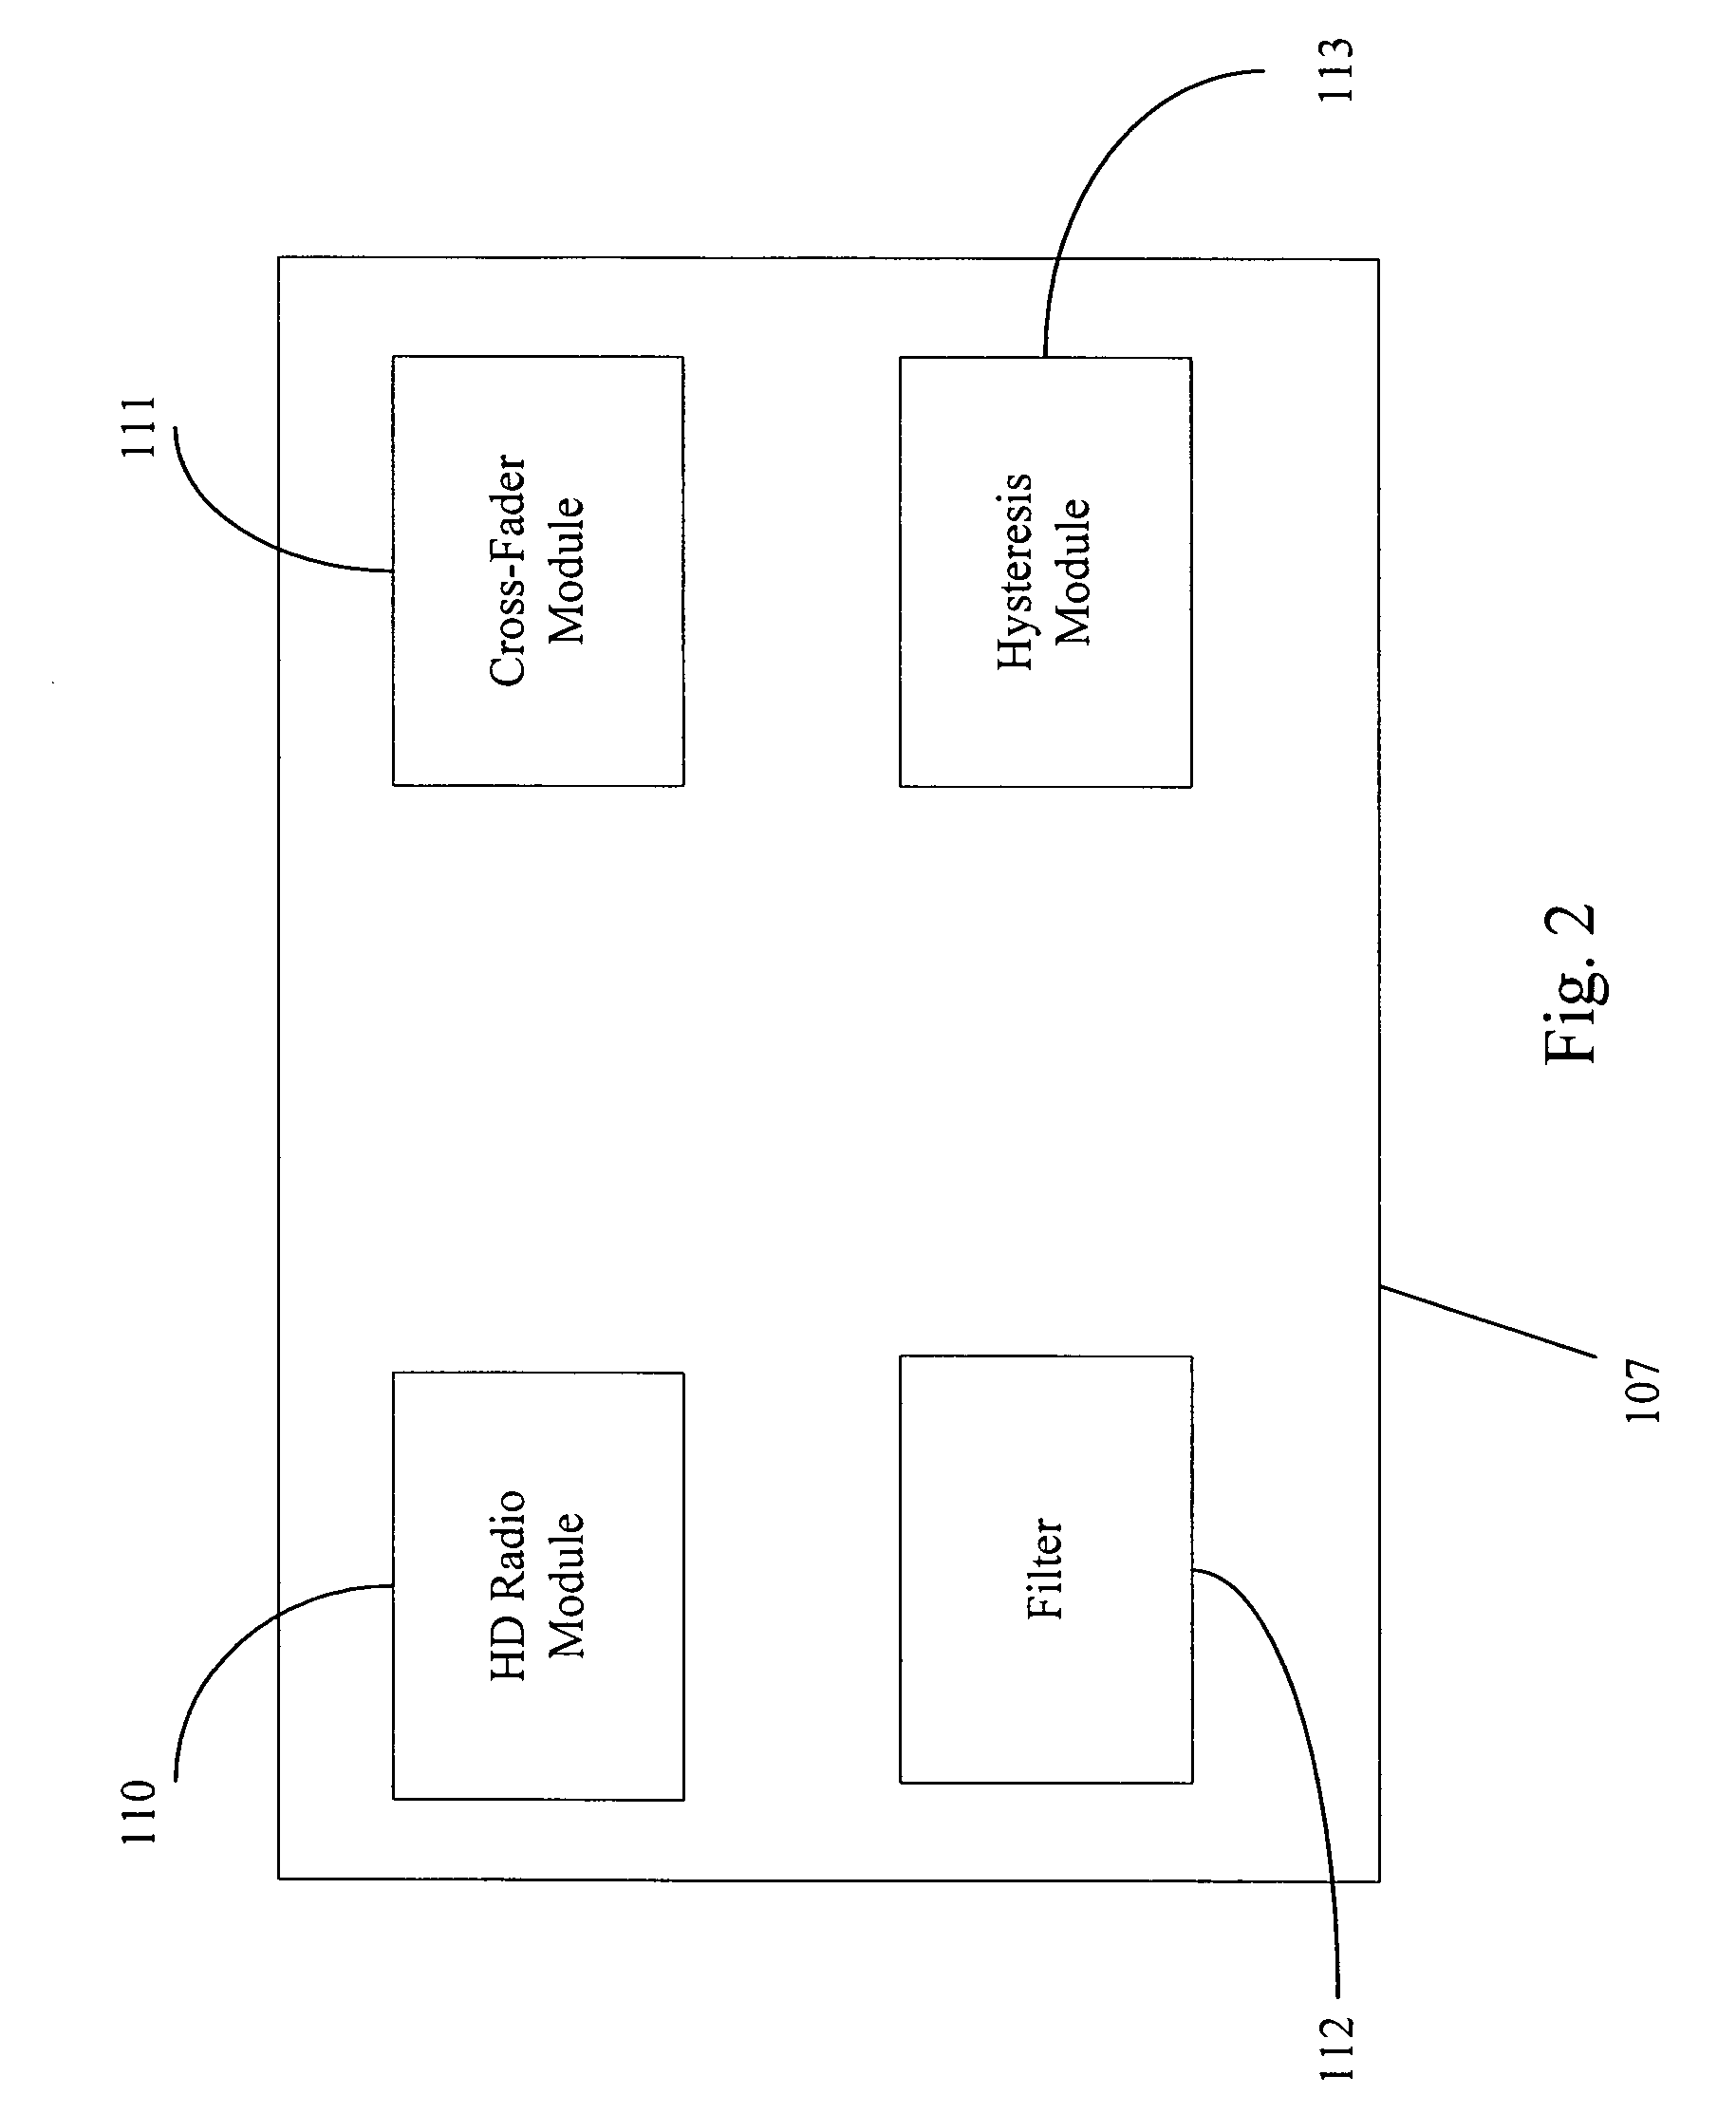 System for high definition radio blending